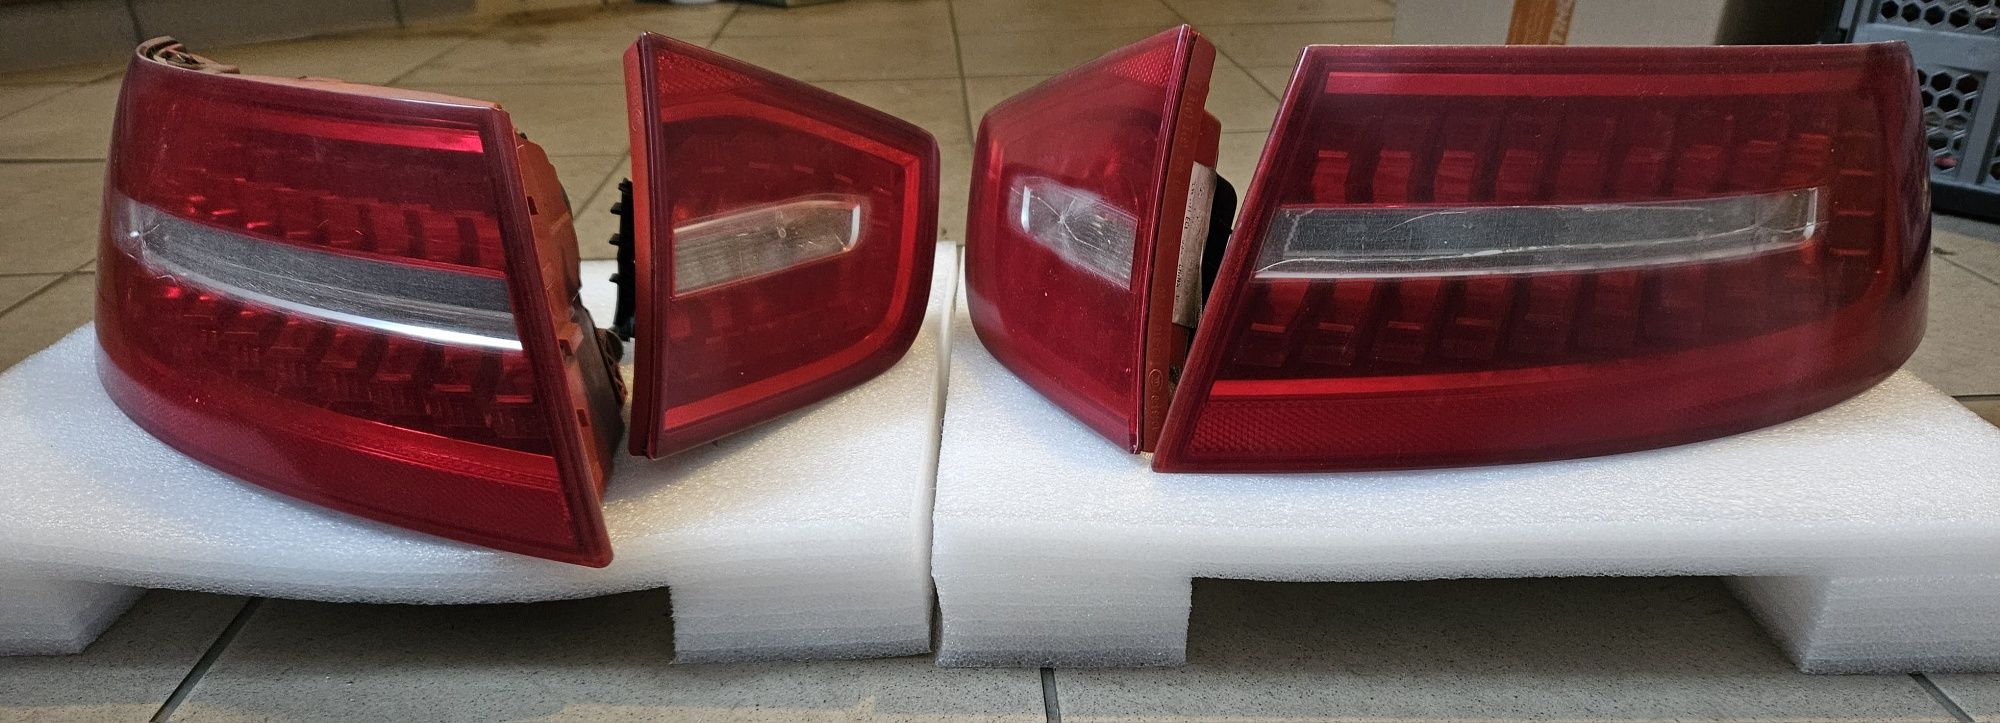 Lampy tylne Audi A6 C6 Lift